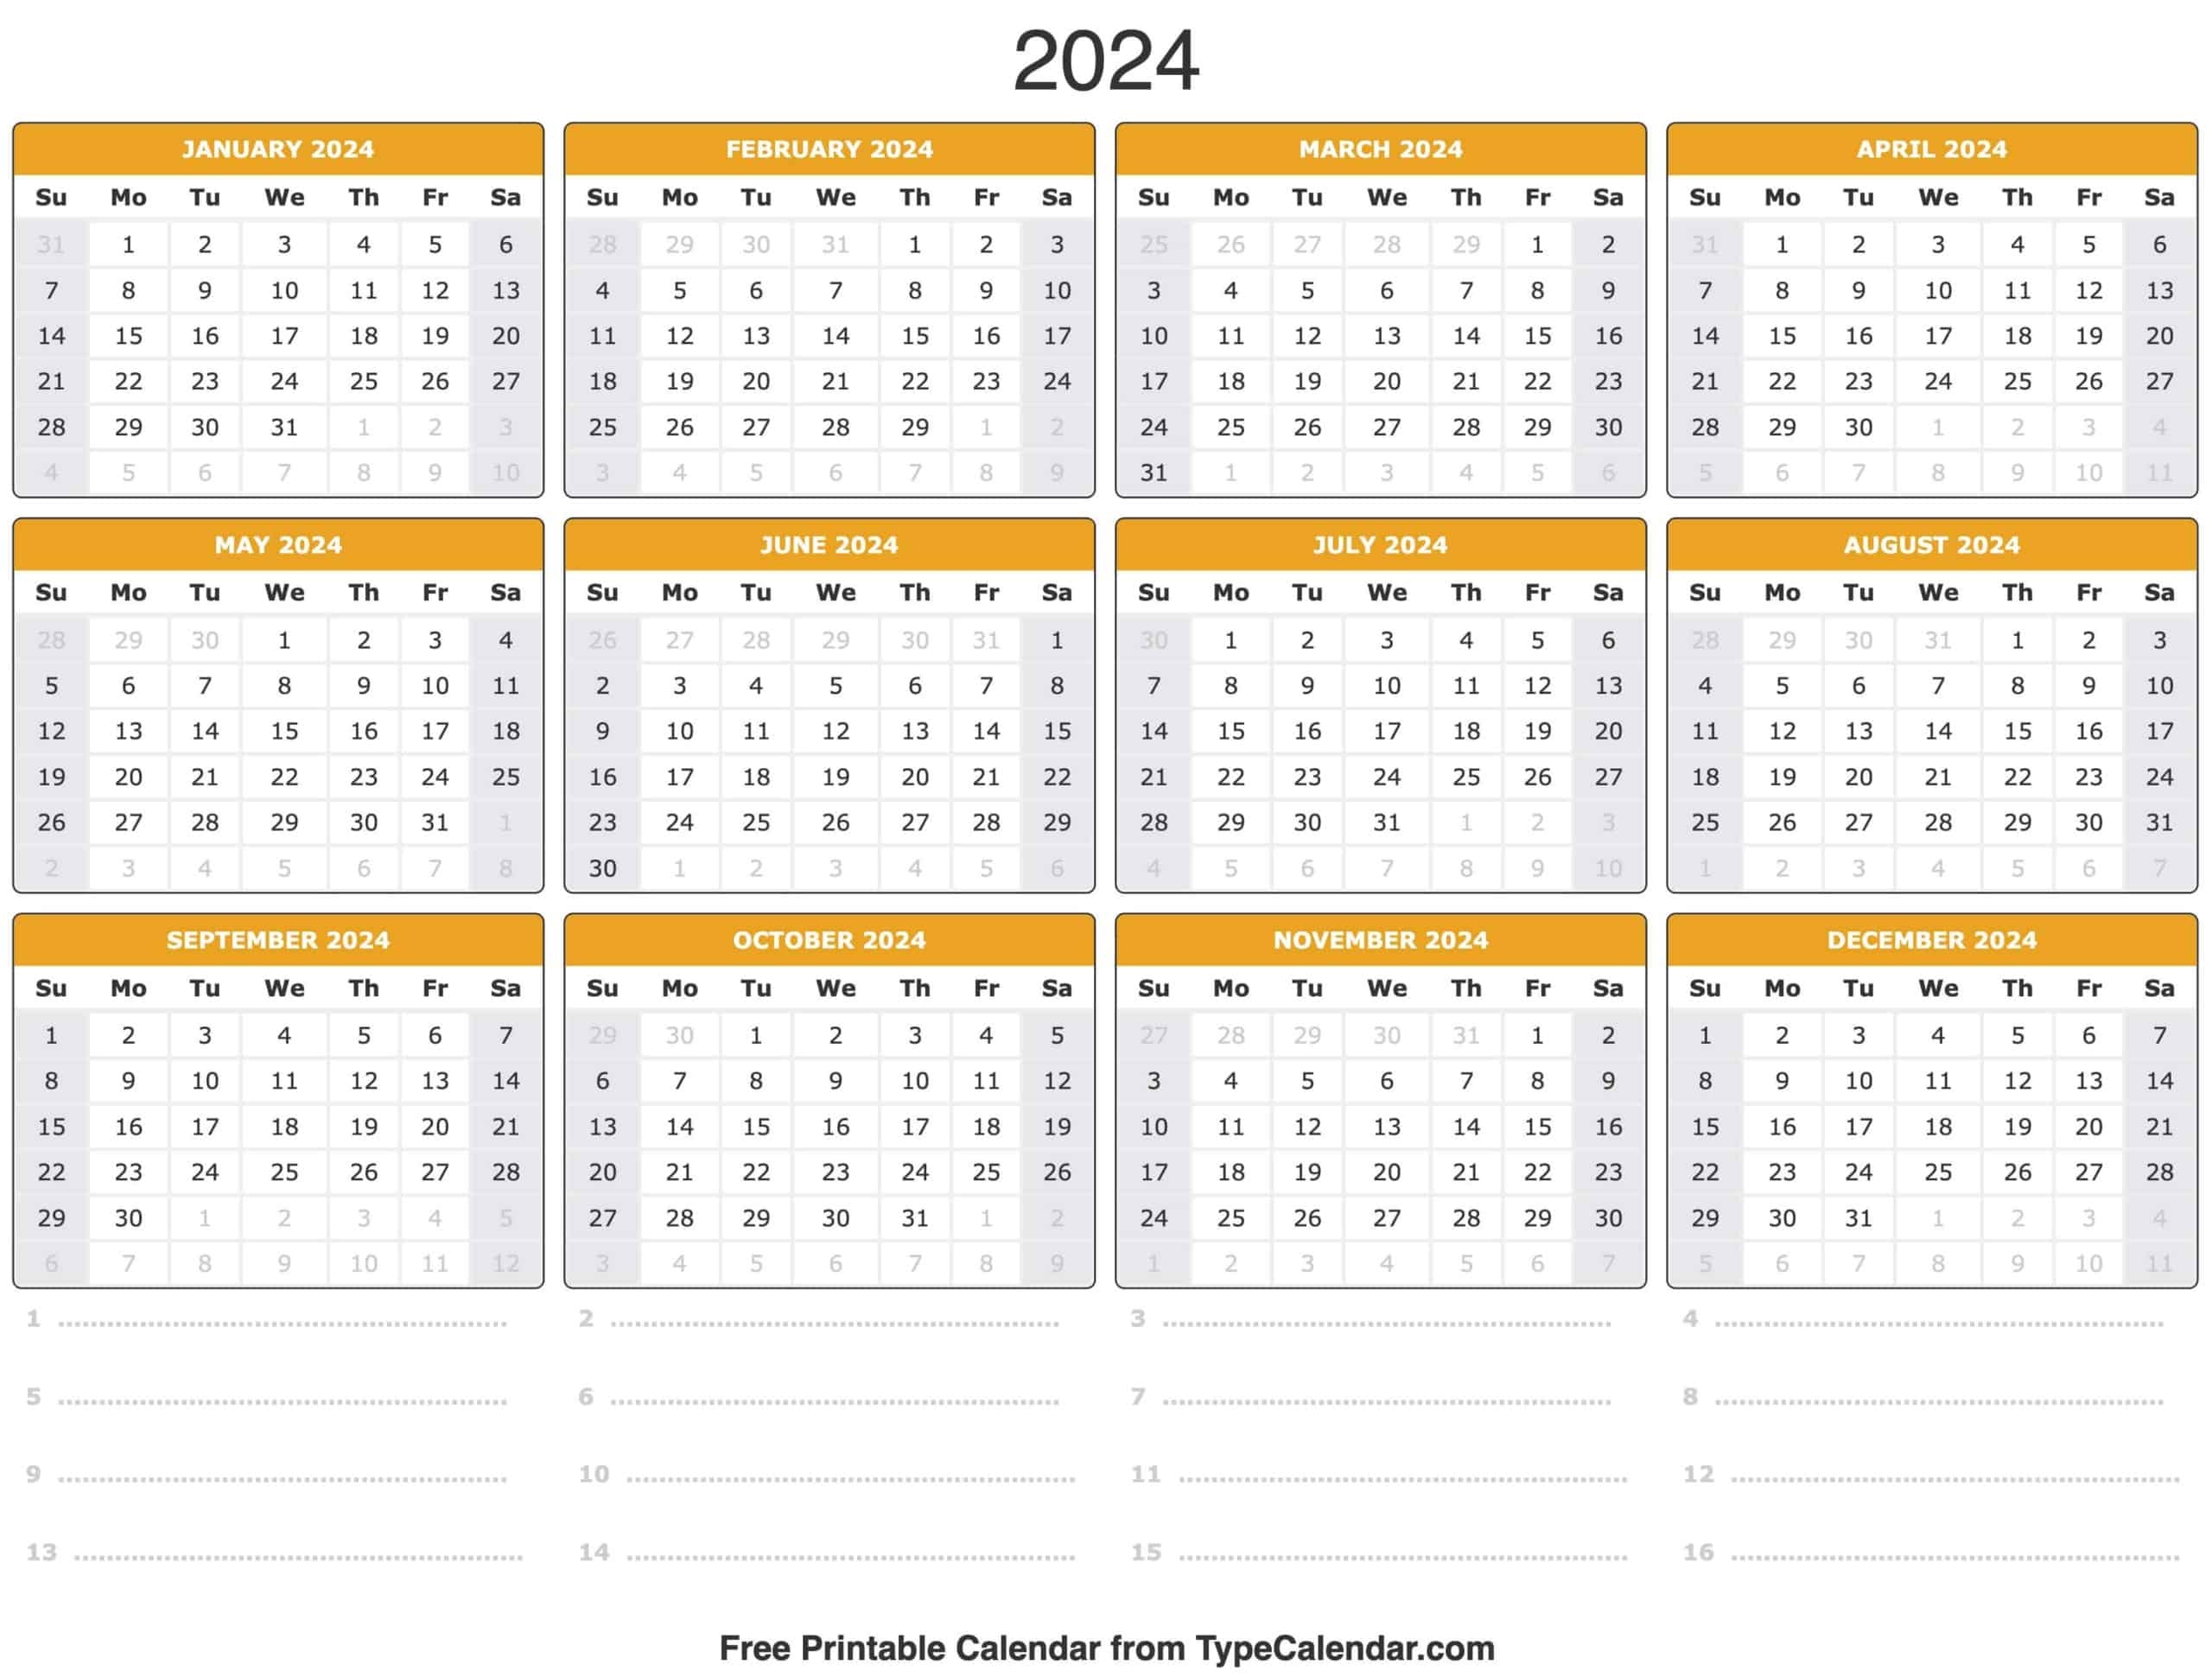 2024 Calendar: Free Printable Calendar With Holidays pertaining to Free Printable Calendar 2024 Weekdays Only